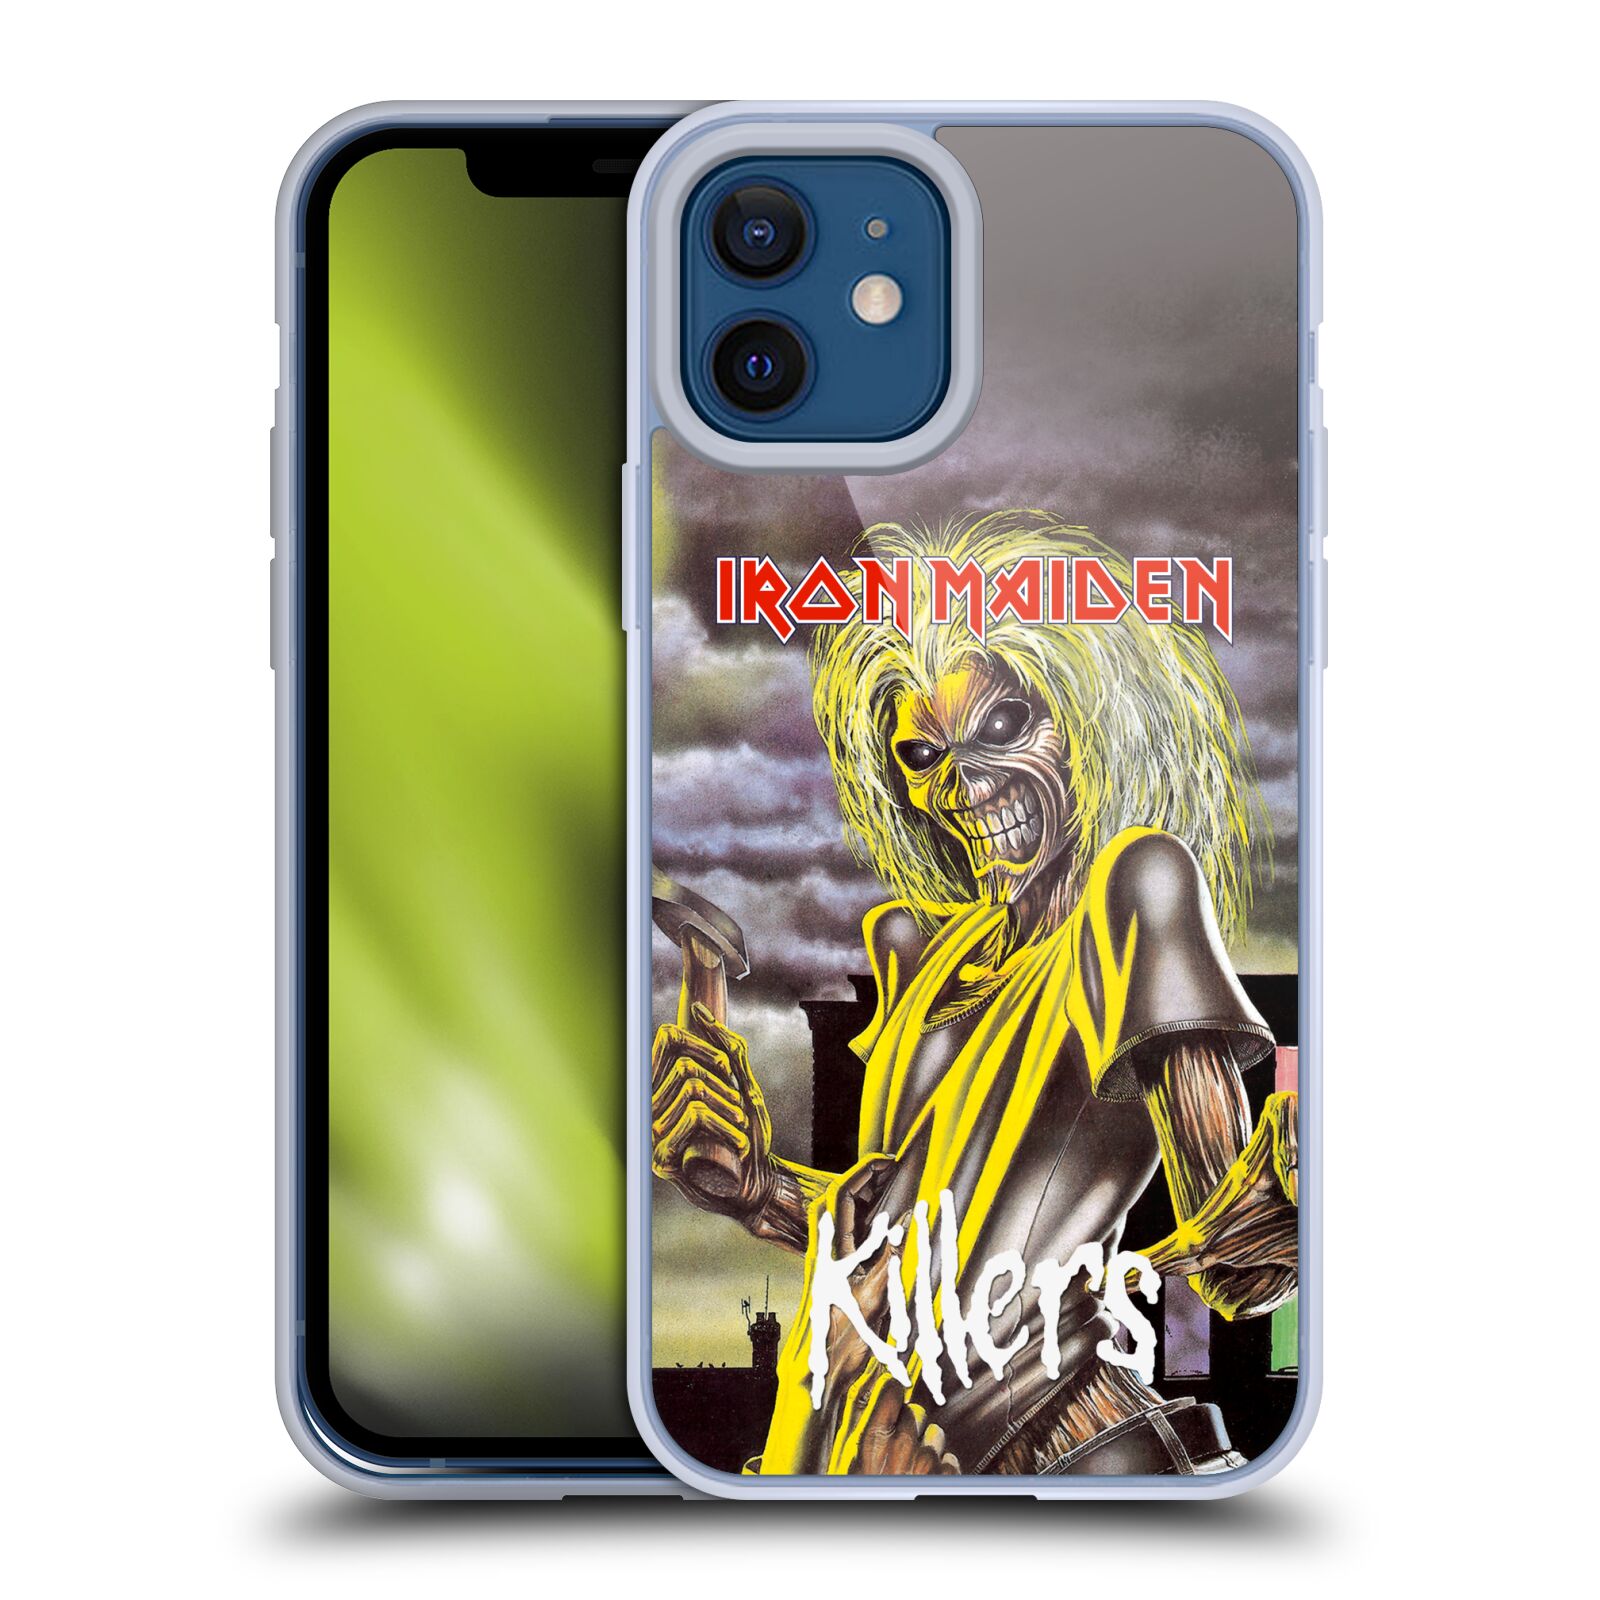 Silikonové pouzdro na mobil Apple iPhone 12 / 12 Pro - Head Case - Iron Maiden - Killers (Silikonový kryt, obal, pouzdro na mobilní telefon Apple iPhone 12 / Apple iPhone 12 Pro (6,1") s motivem Iron Maiden - Killers)